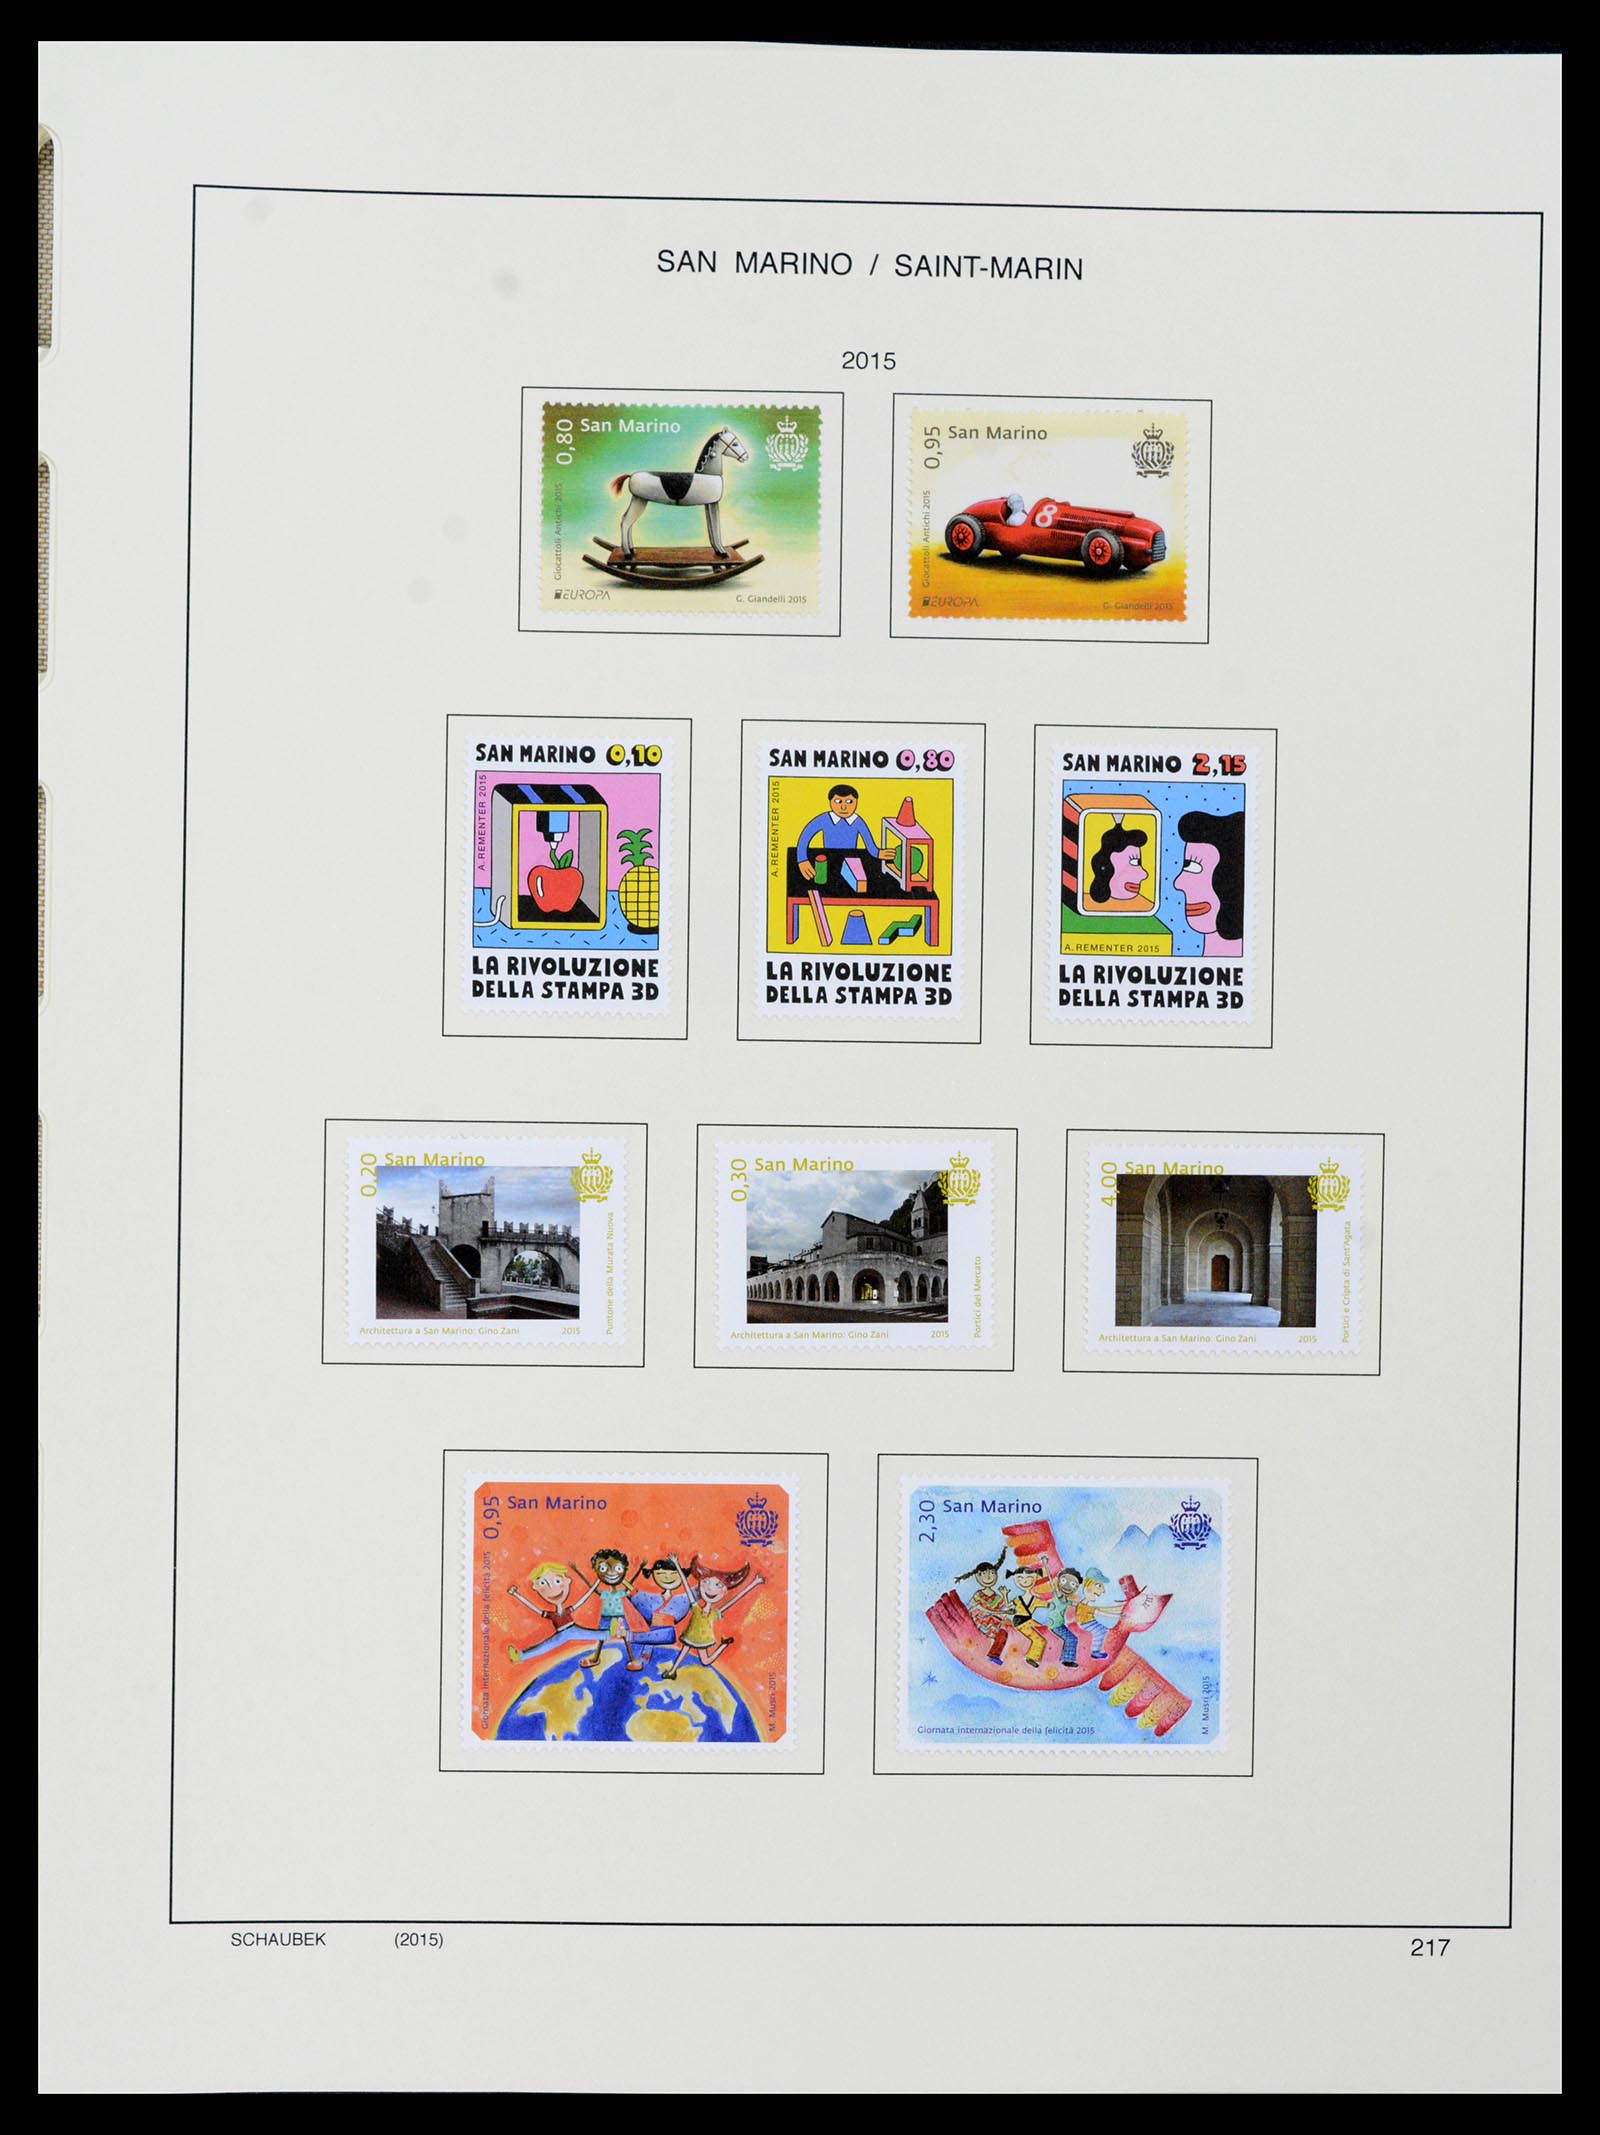 37556 284 - Stamp collection 37556 San Marino 1877-2017.